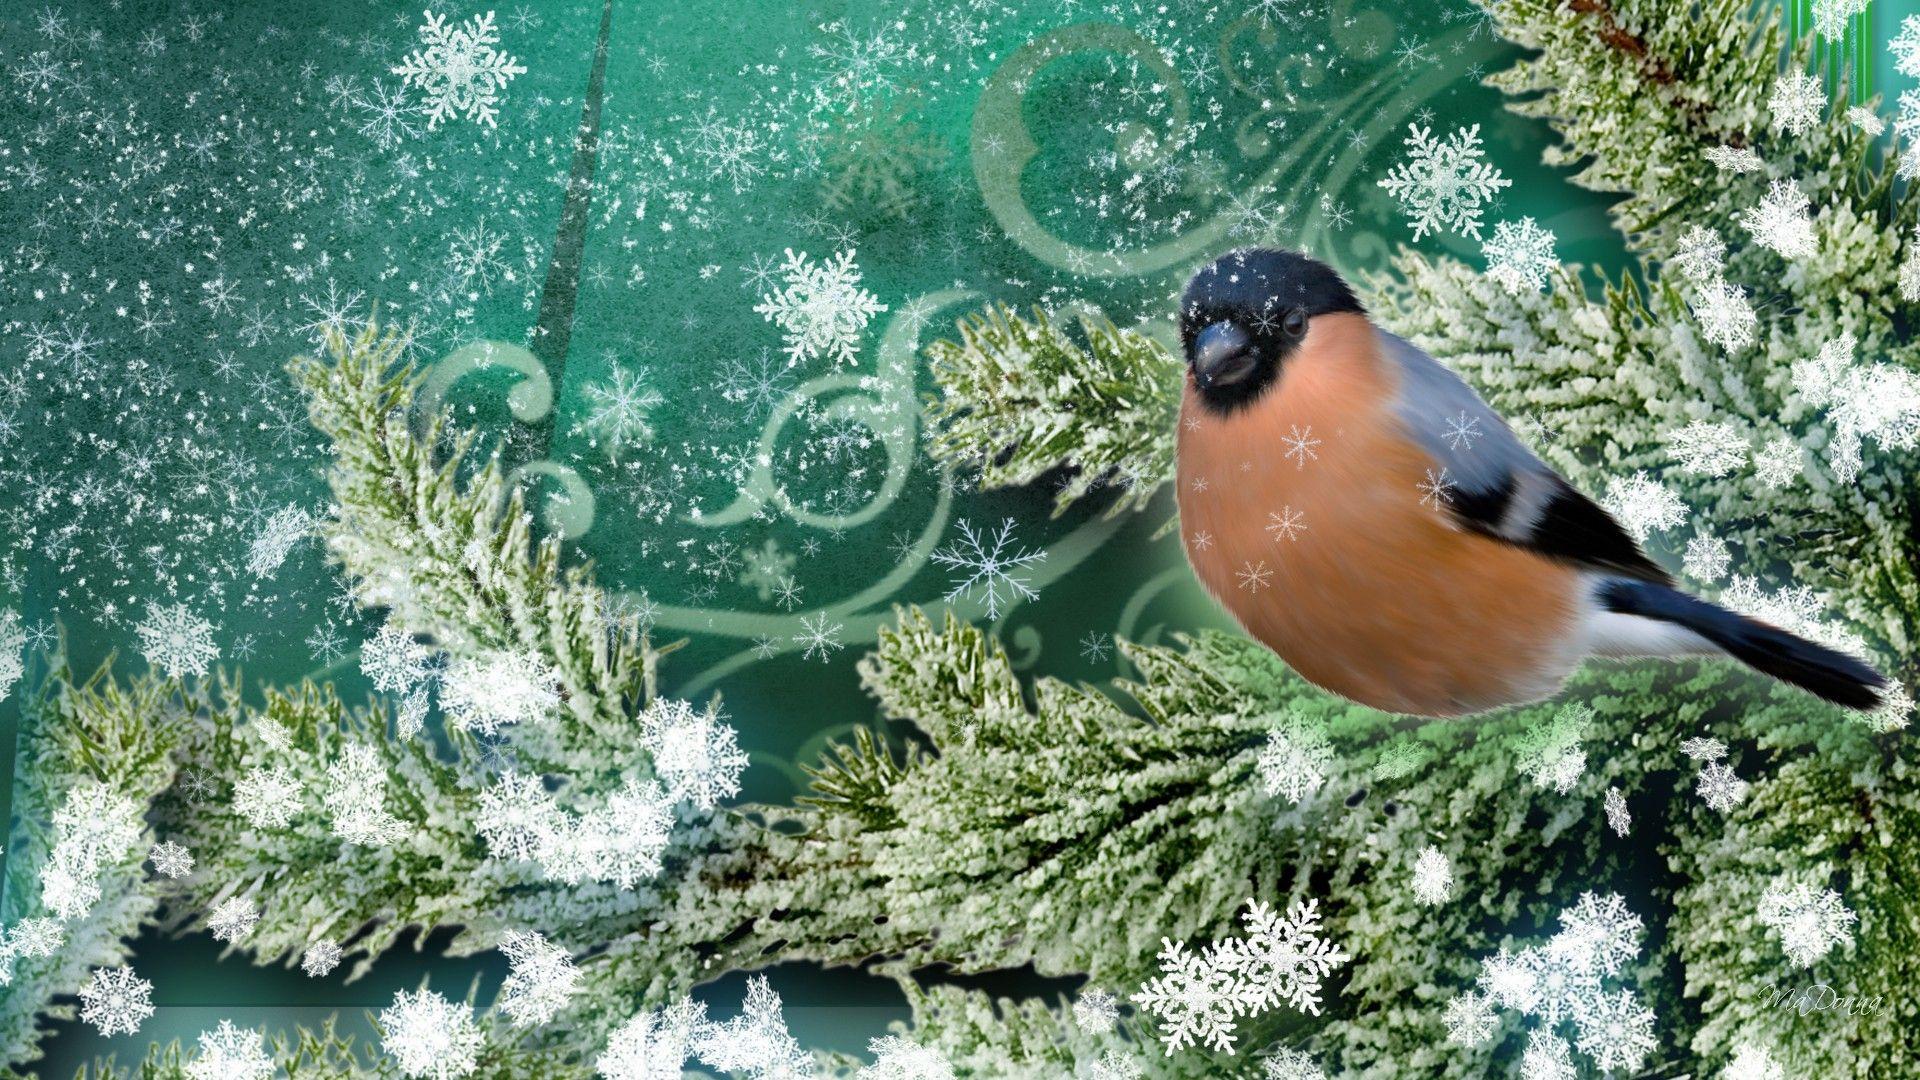 Winter Snowing Bird Firefox Persona Freeze Christmas Cold Tree Snow